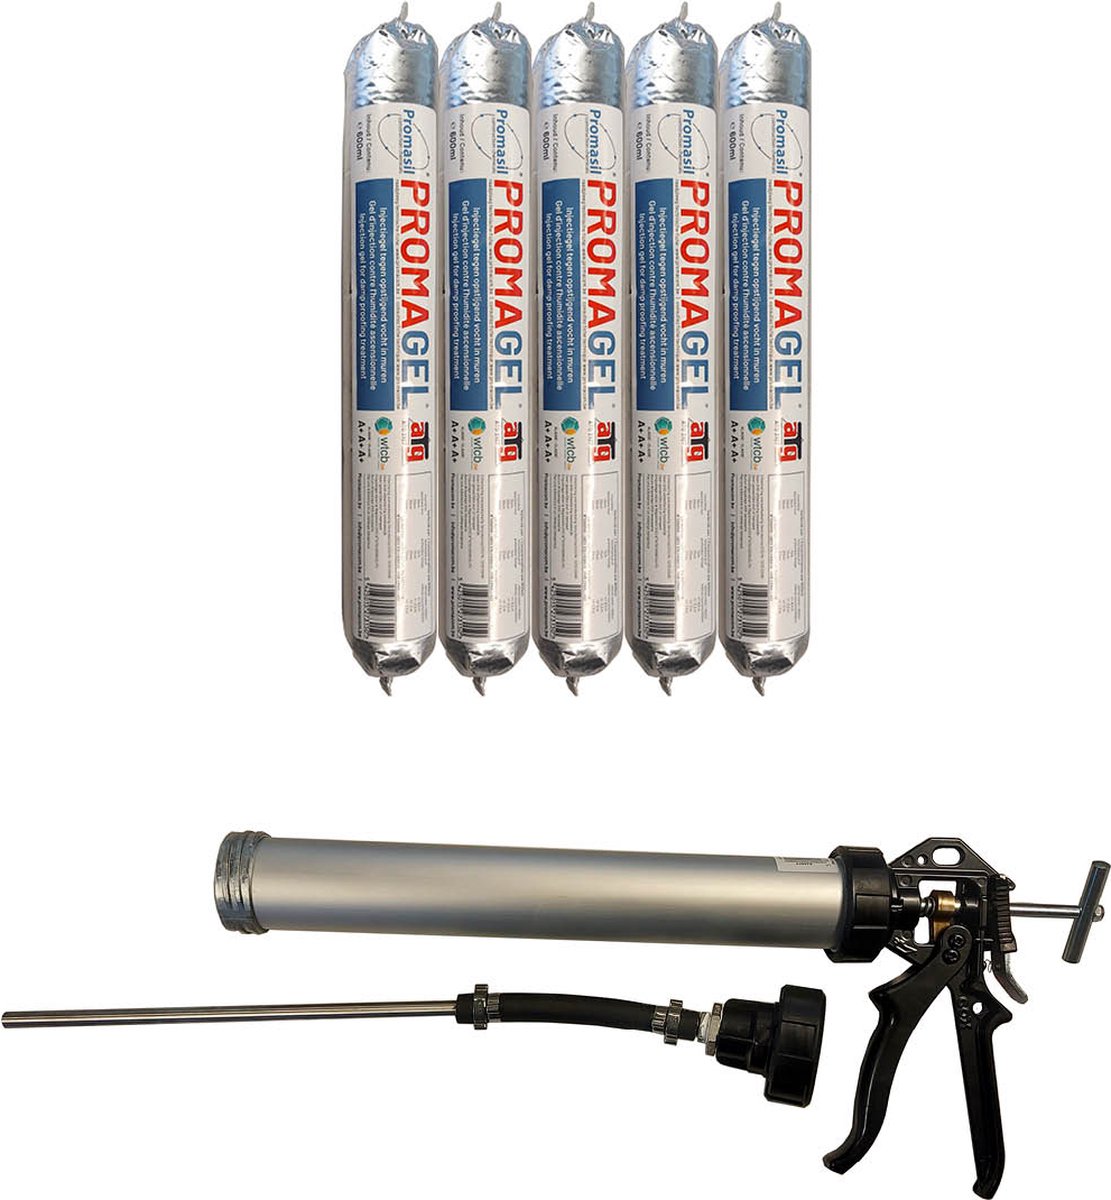 Promasil Promagel set - Injectiegel Opstijgend vocht worst 600 ml 5 stuks ATG nr 3107 (kwaliteitscertificaat) - WTCB A+A+A+ (hoogste kwaliteit) + professioneel injectiepistool - Promasil